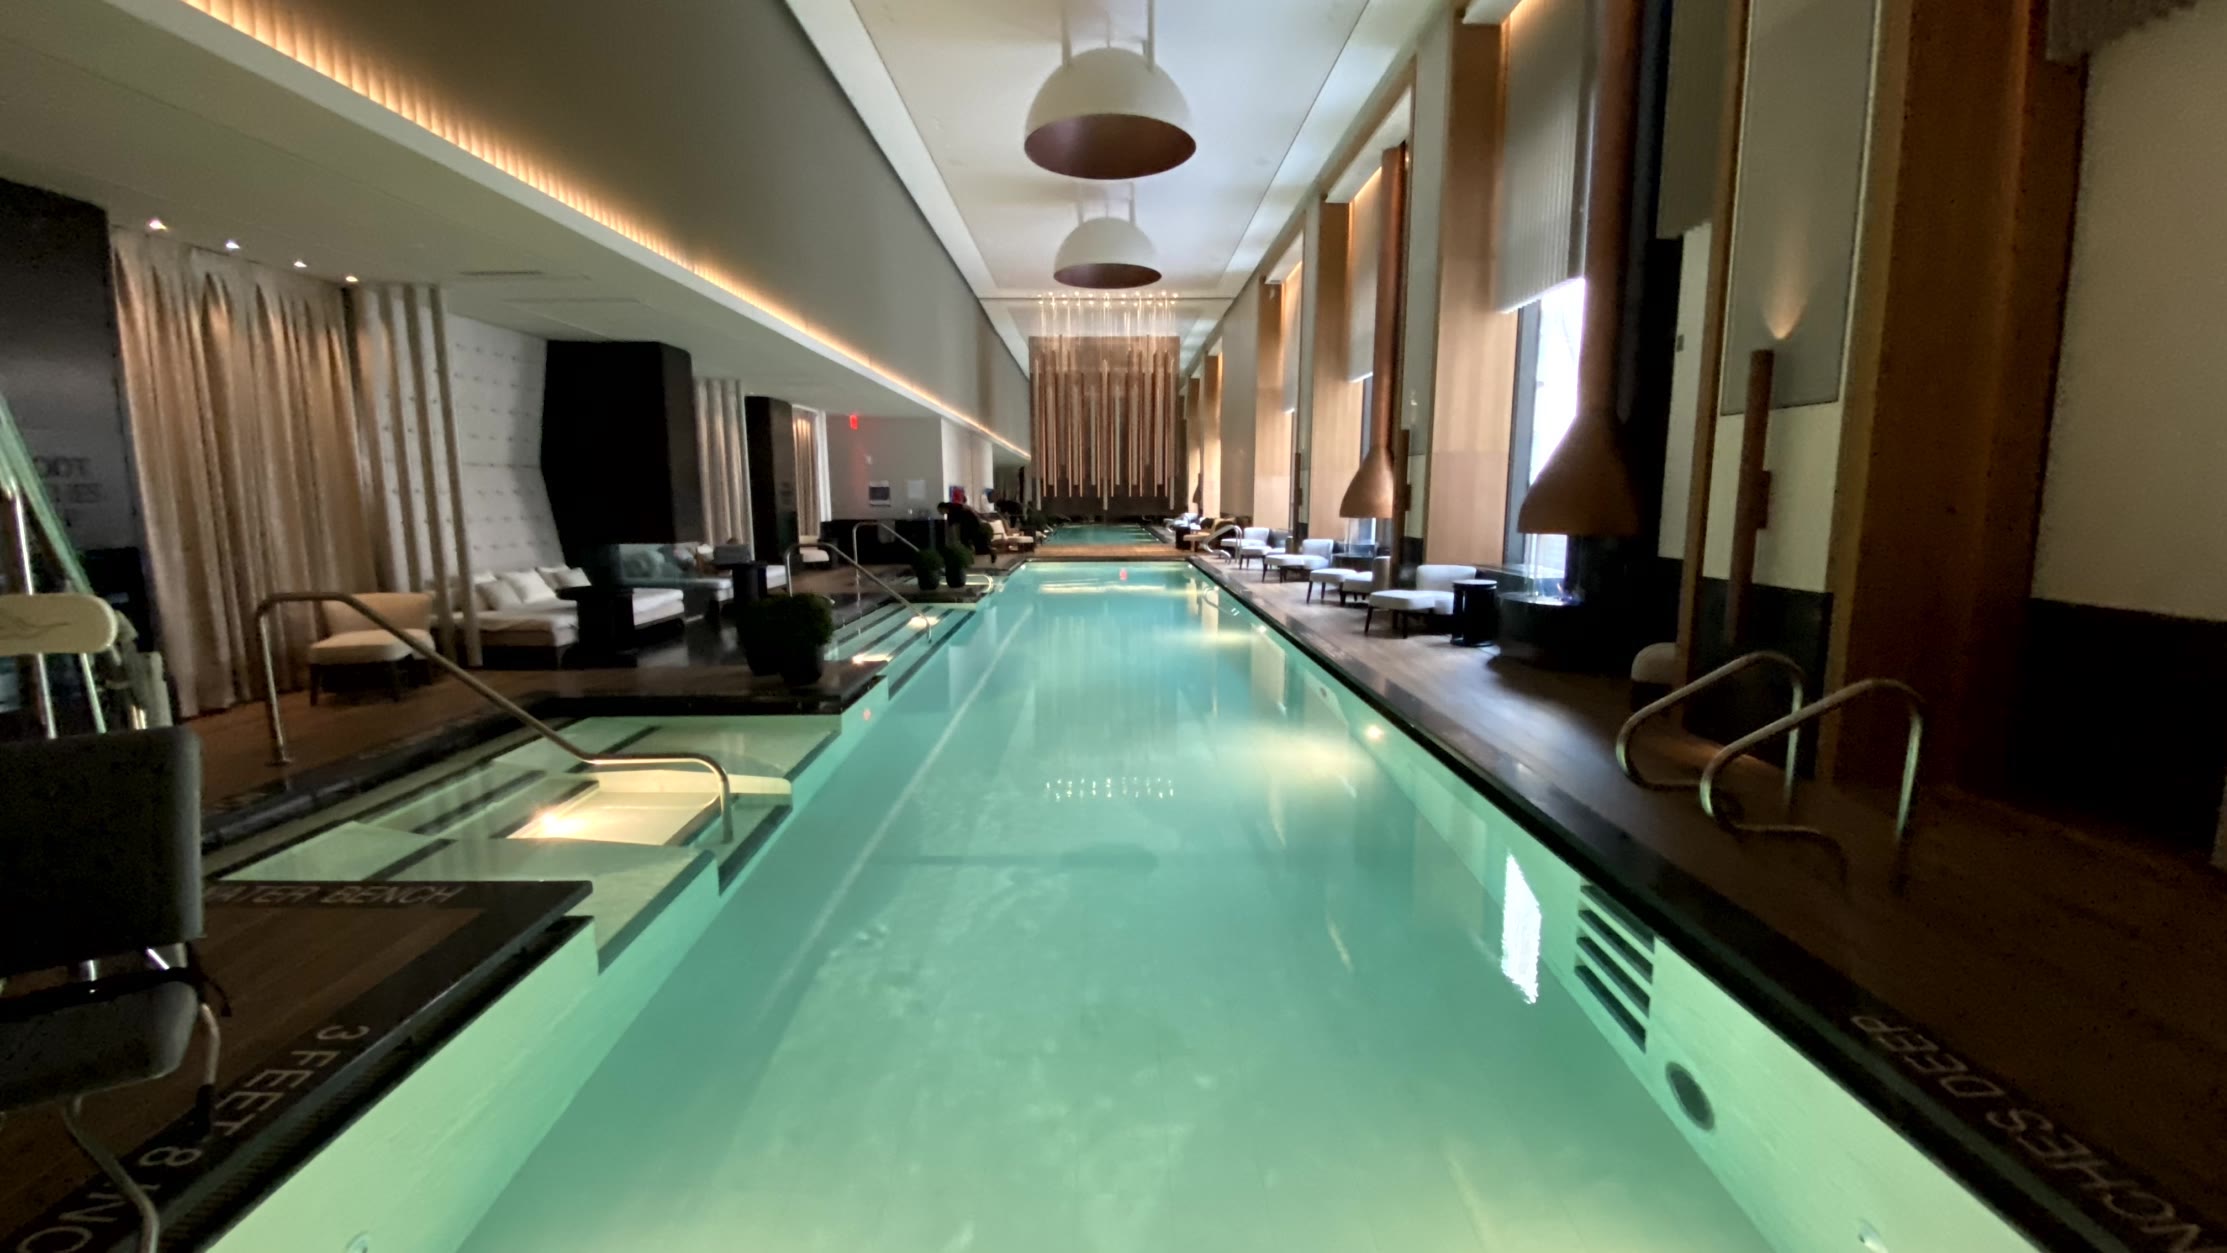 Aman Hotel swimming pool - Unravel Travel TV